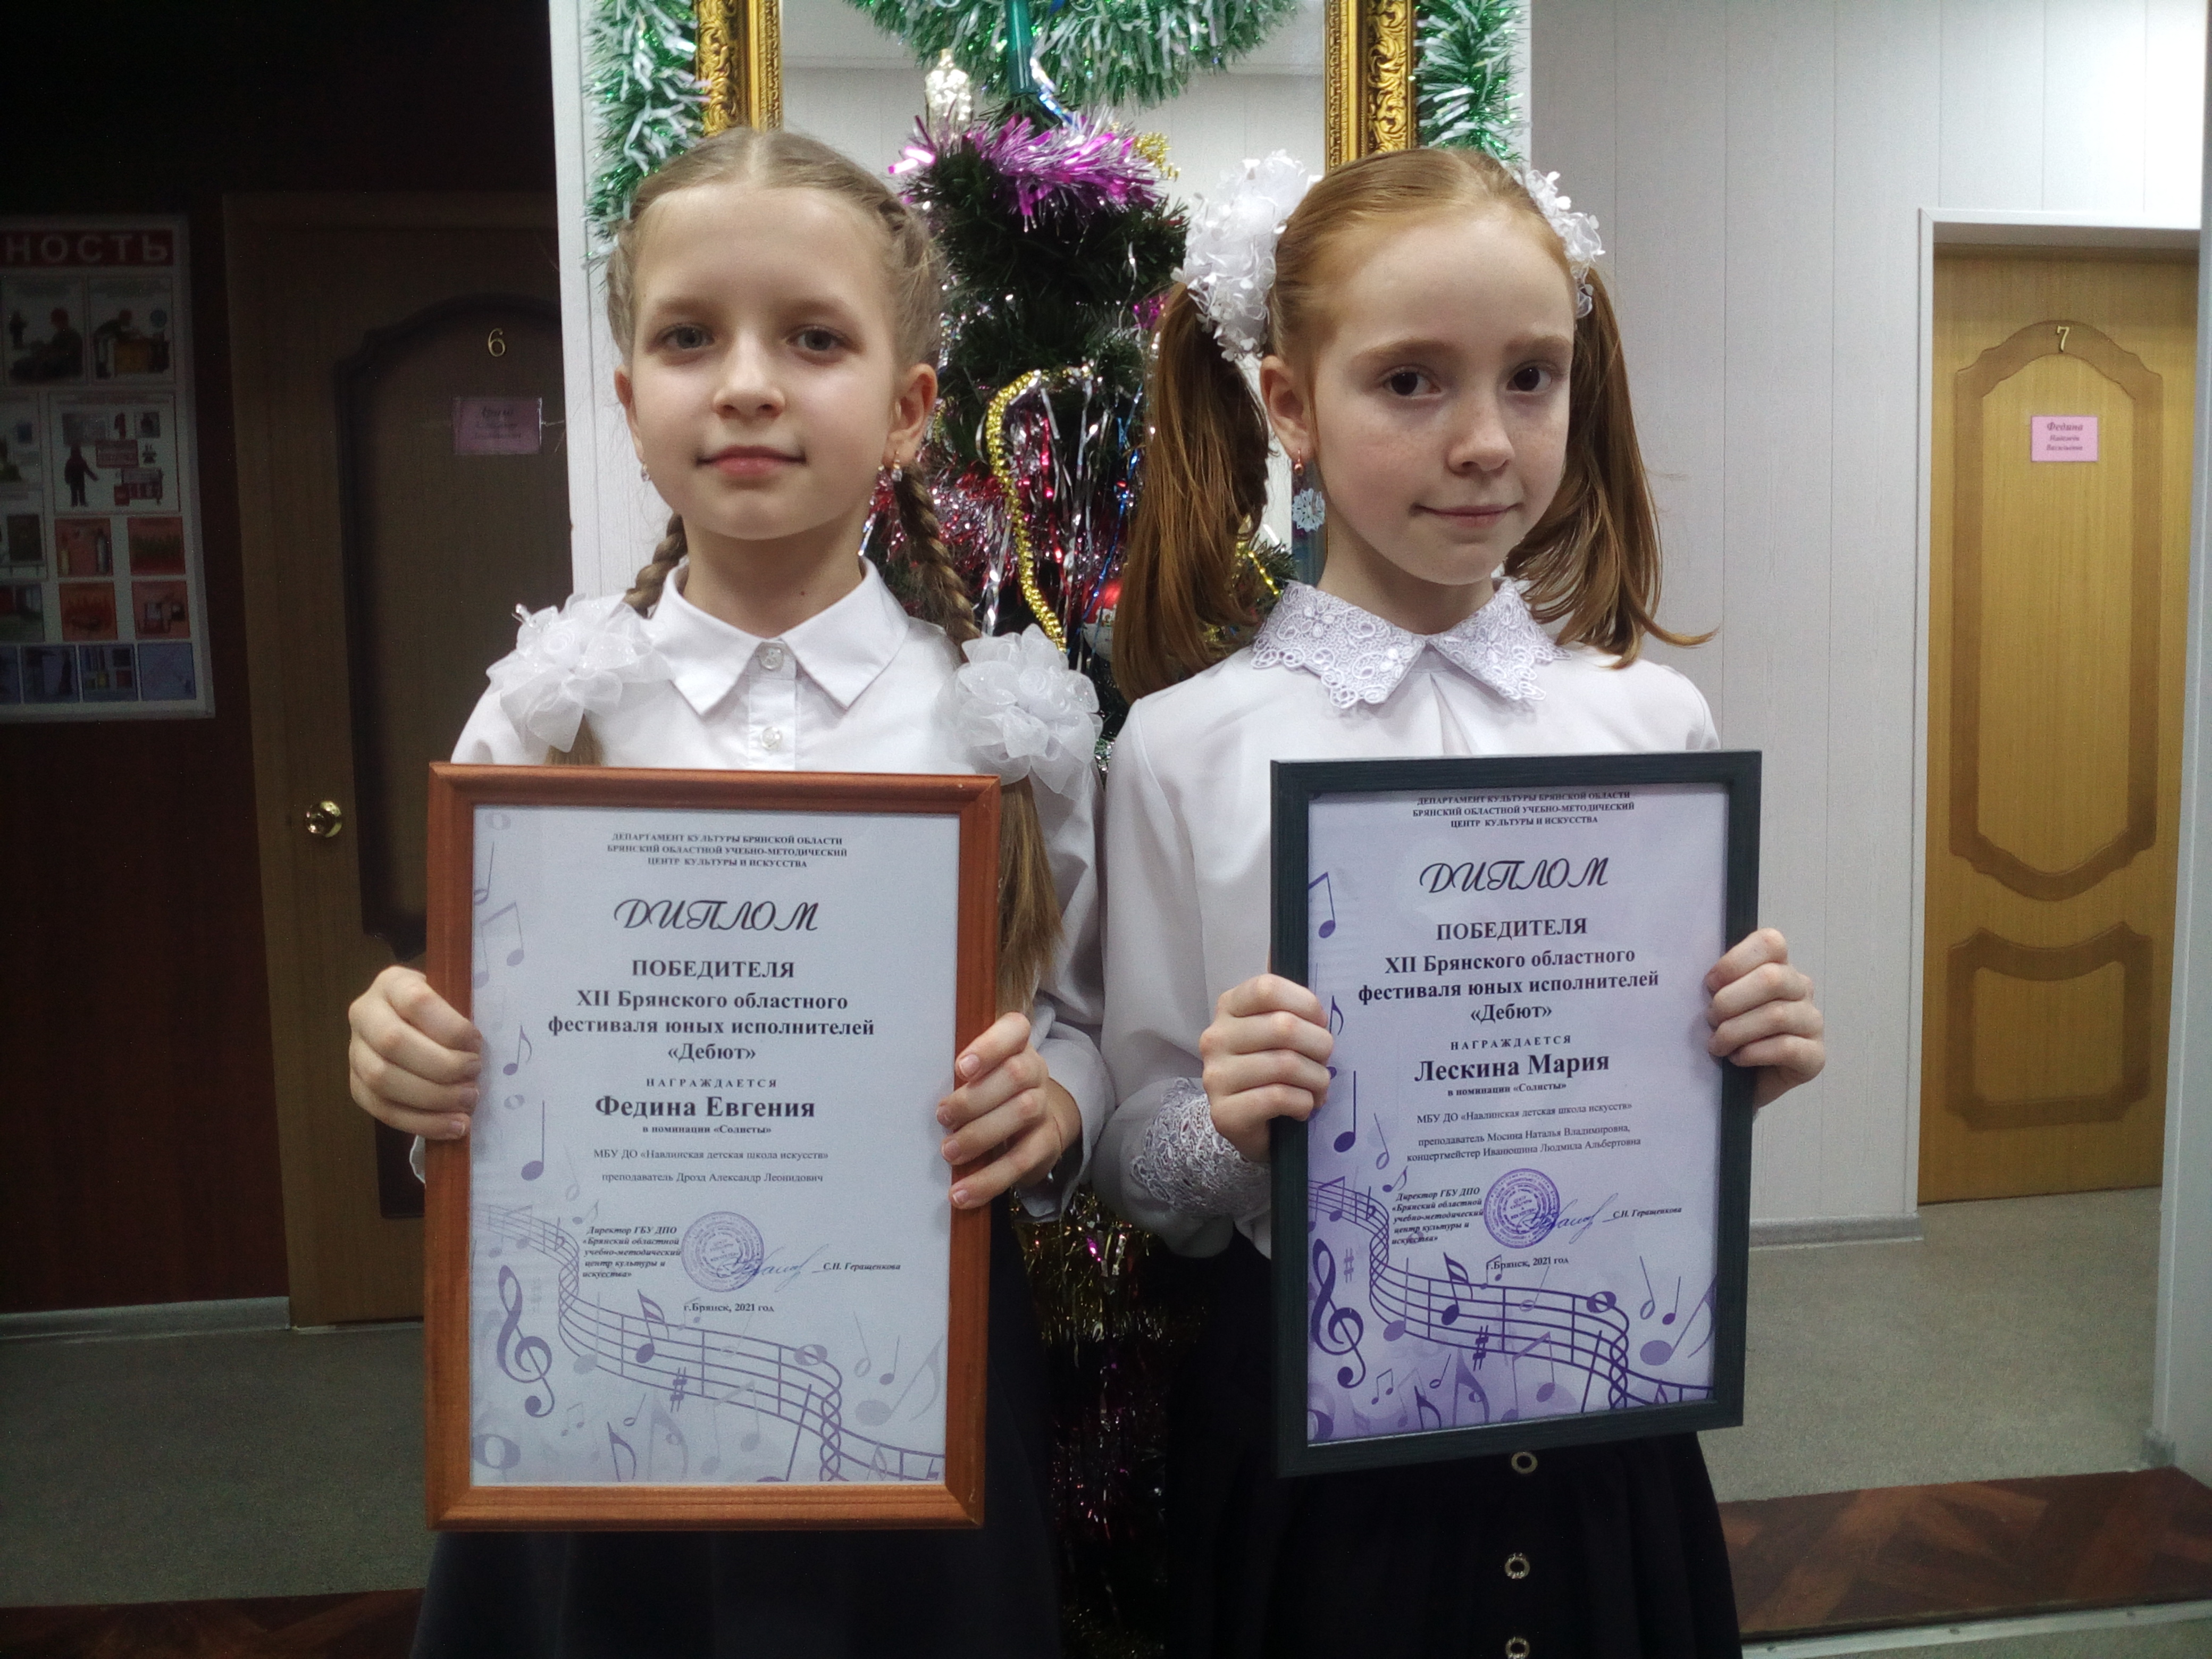 Федина Евгения и Лескина Мария, победители областного этапа конкурса